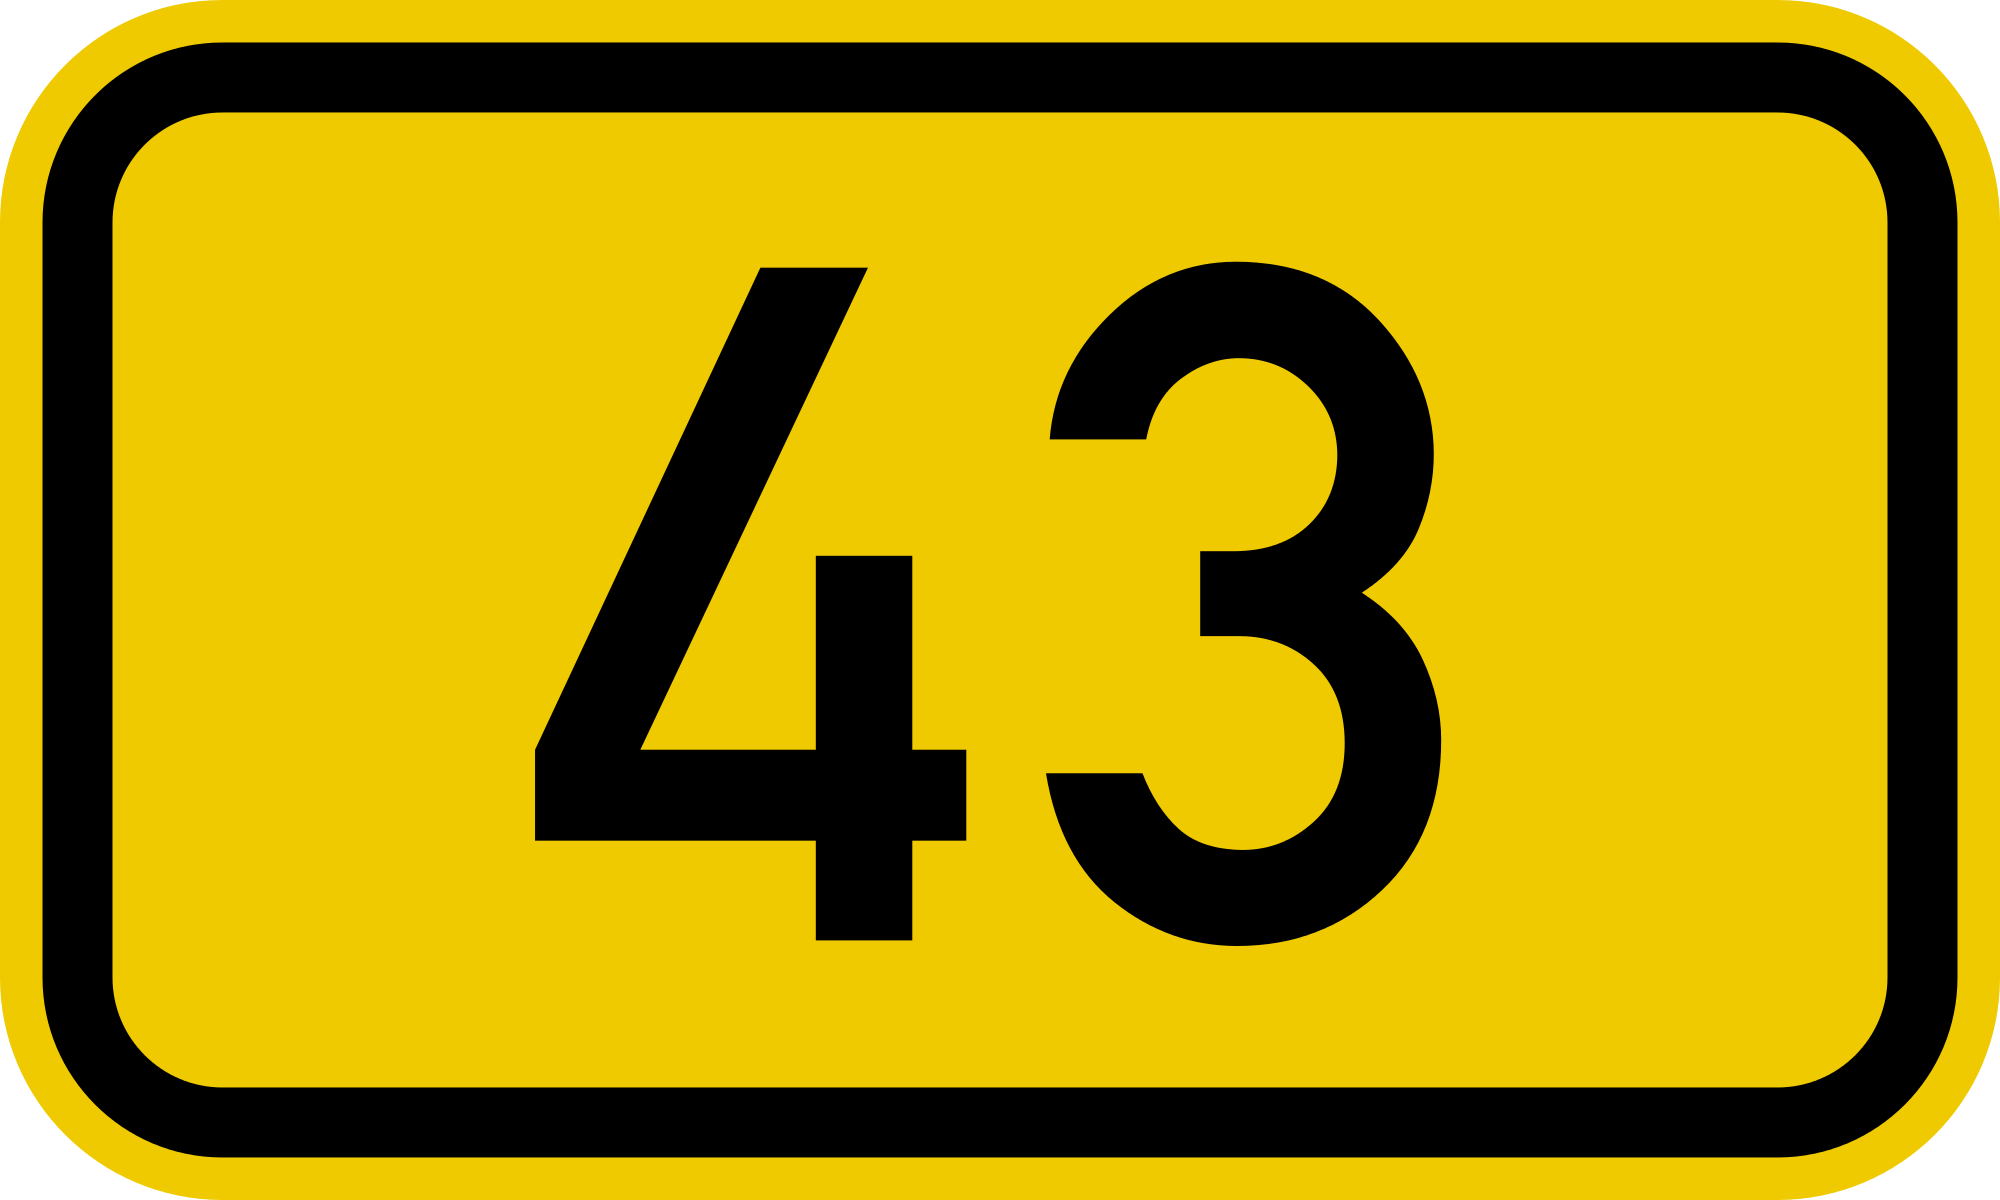 File:Bundesstraße 43 number.svg - Wikimedia Commons